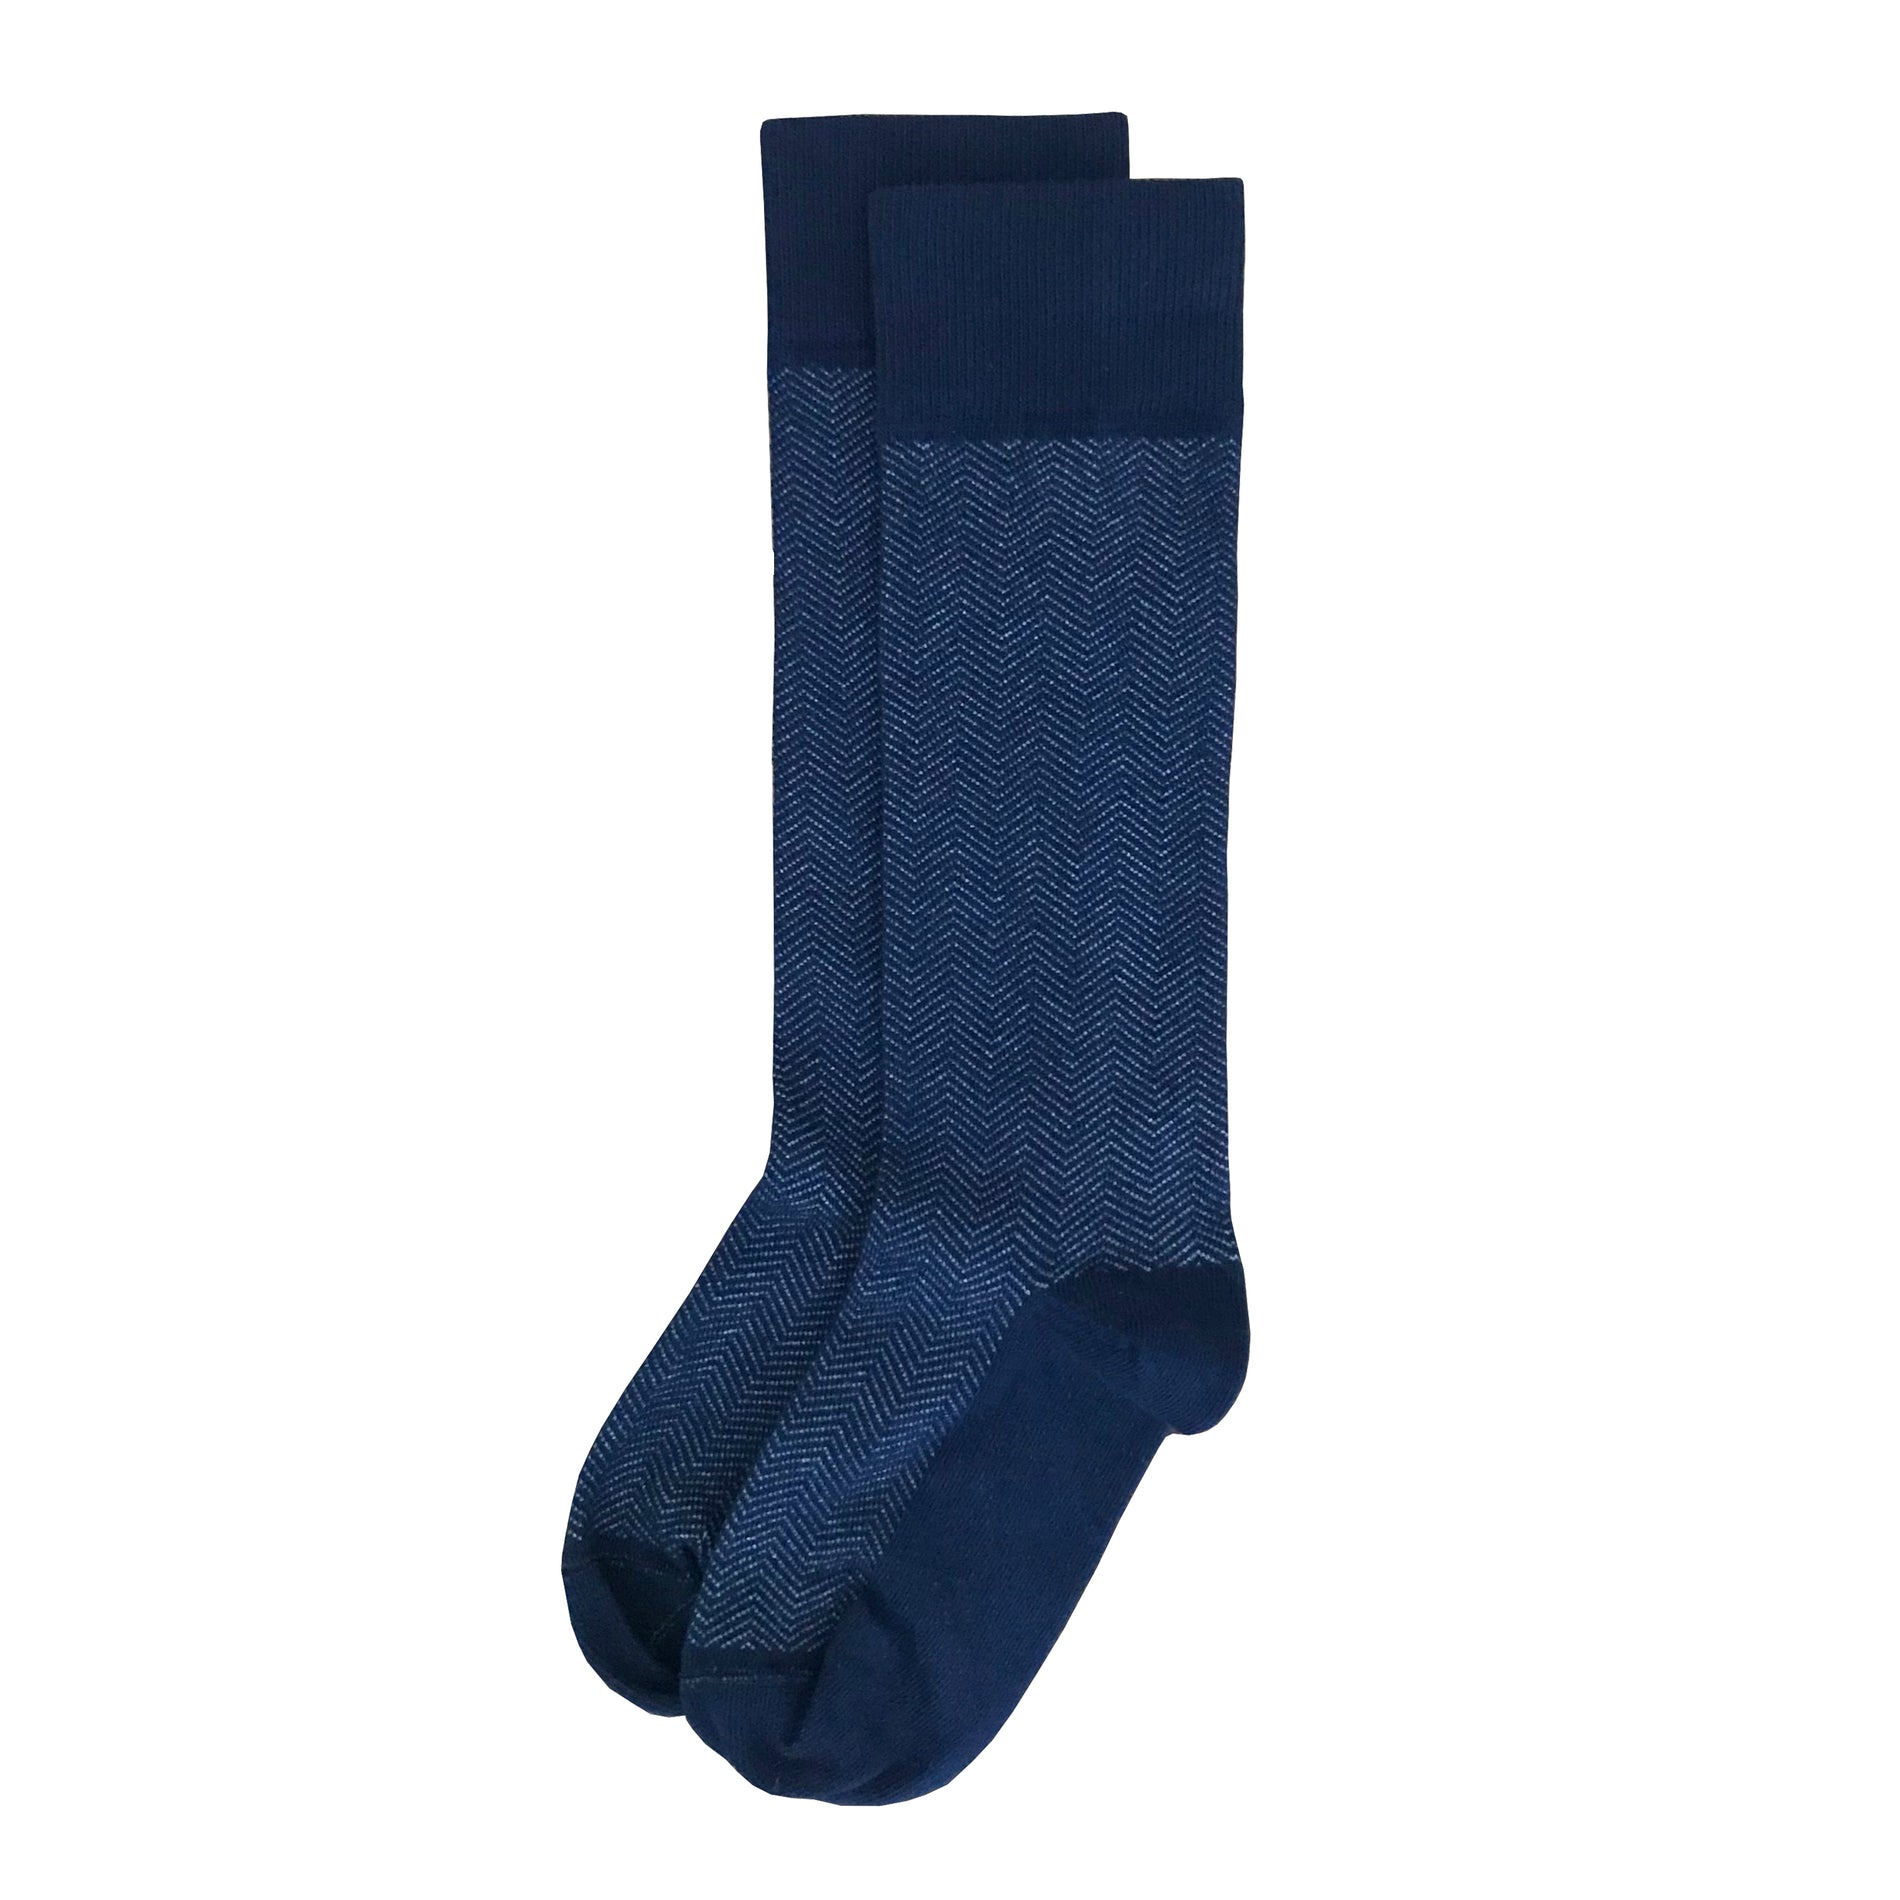 Premium Solids - Boldfoot Socks